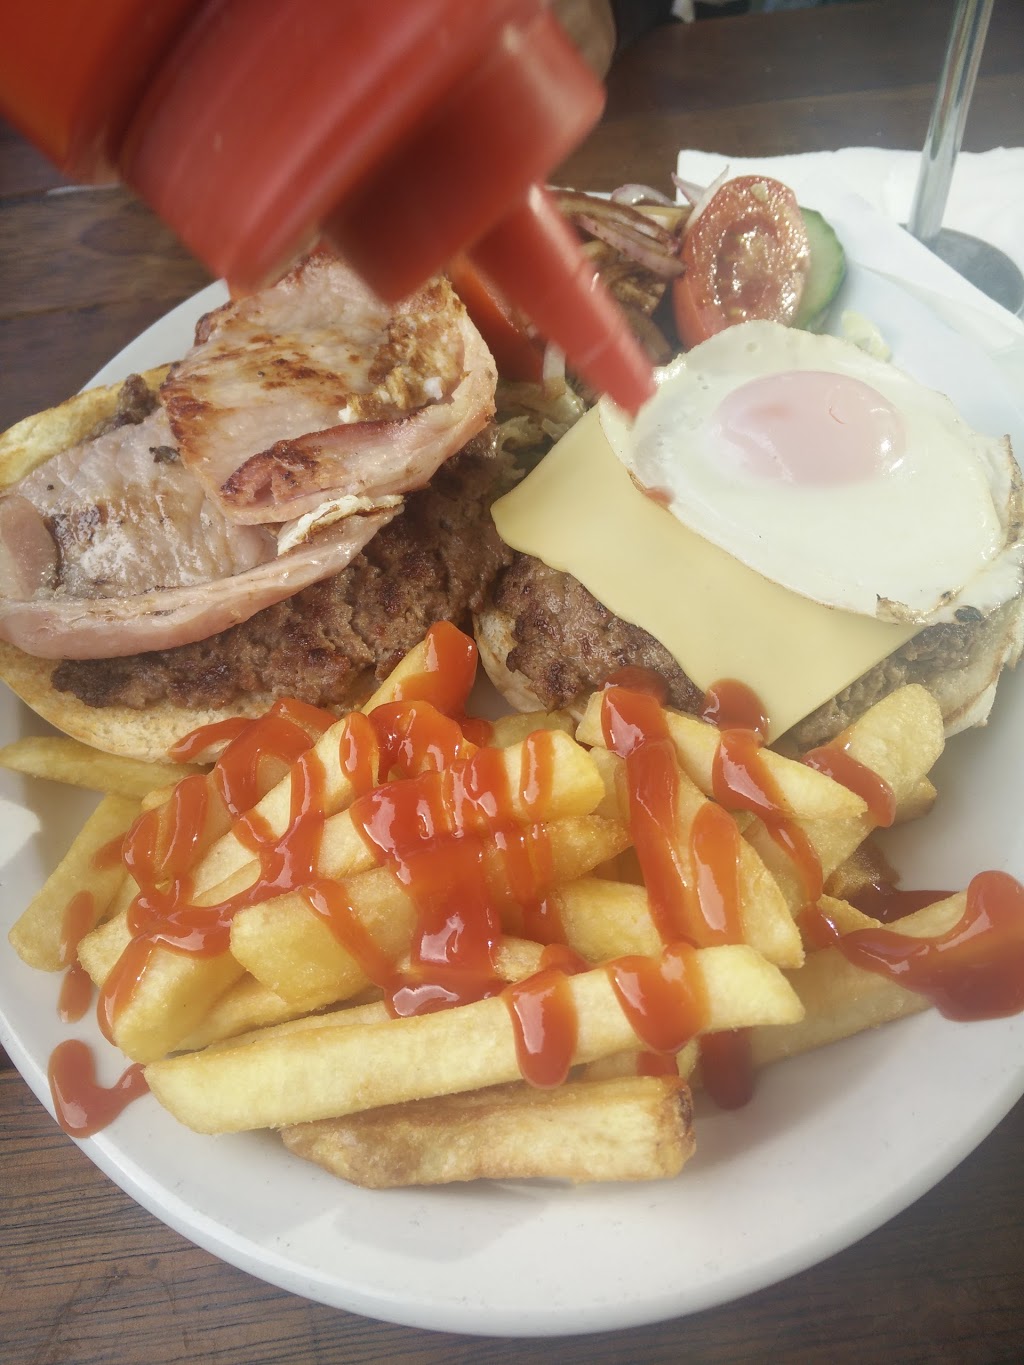 Dannys Burgers | restaurant | 360 St Georges Rd, Melbourne VIC 3068, Australia | 0394815847 OR +61 3 9481 5847